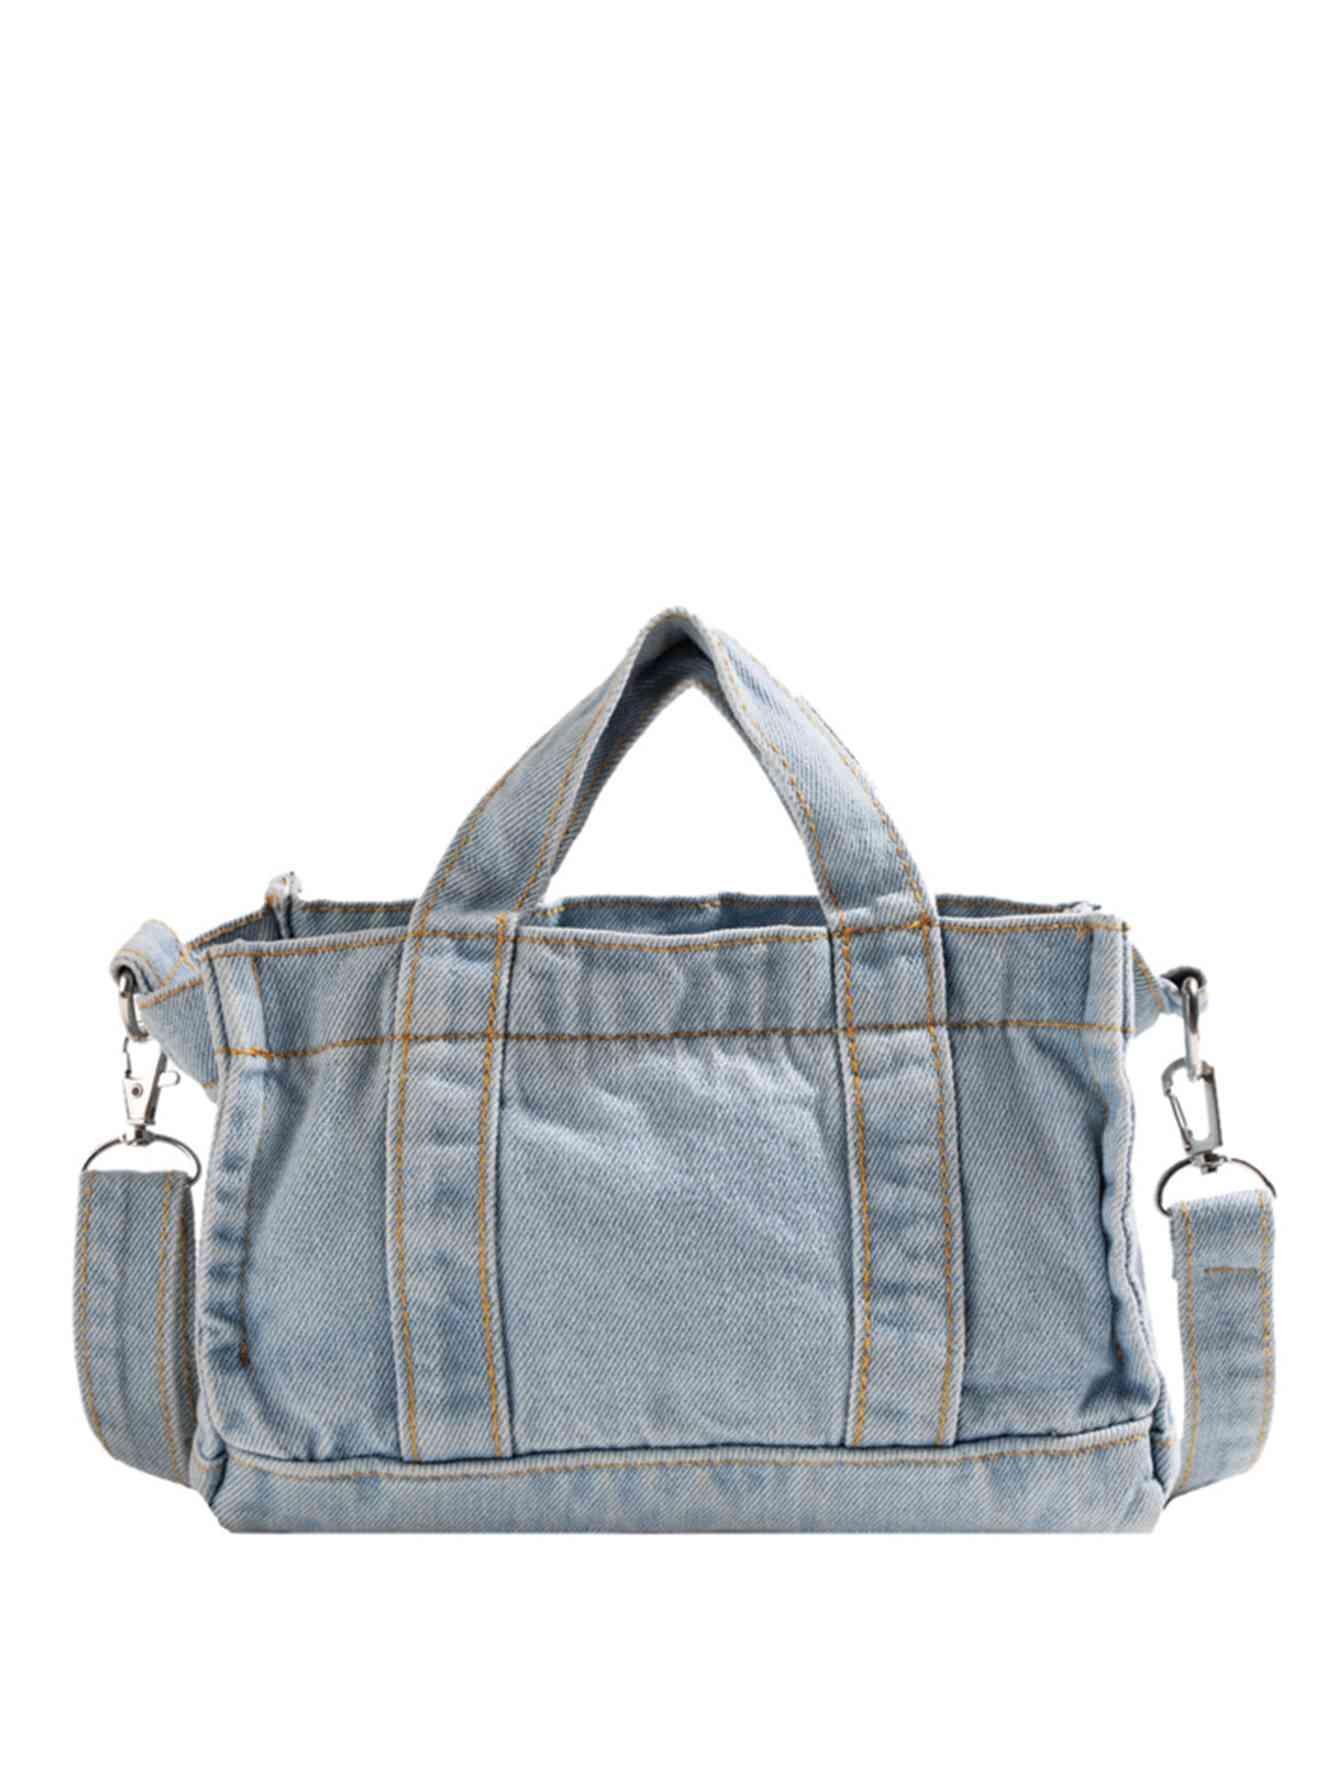 Denim Shoulder Bag by Adored - Closet of Ren